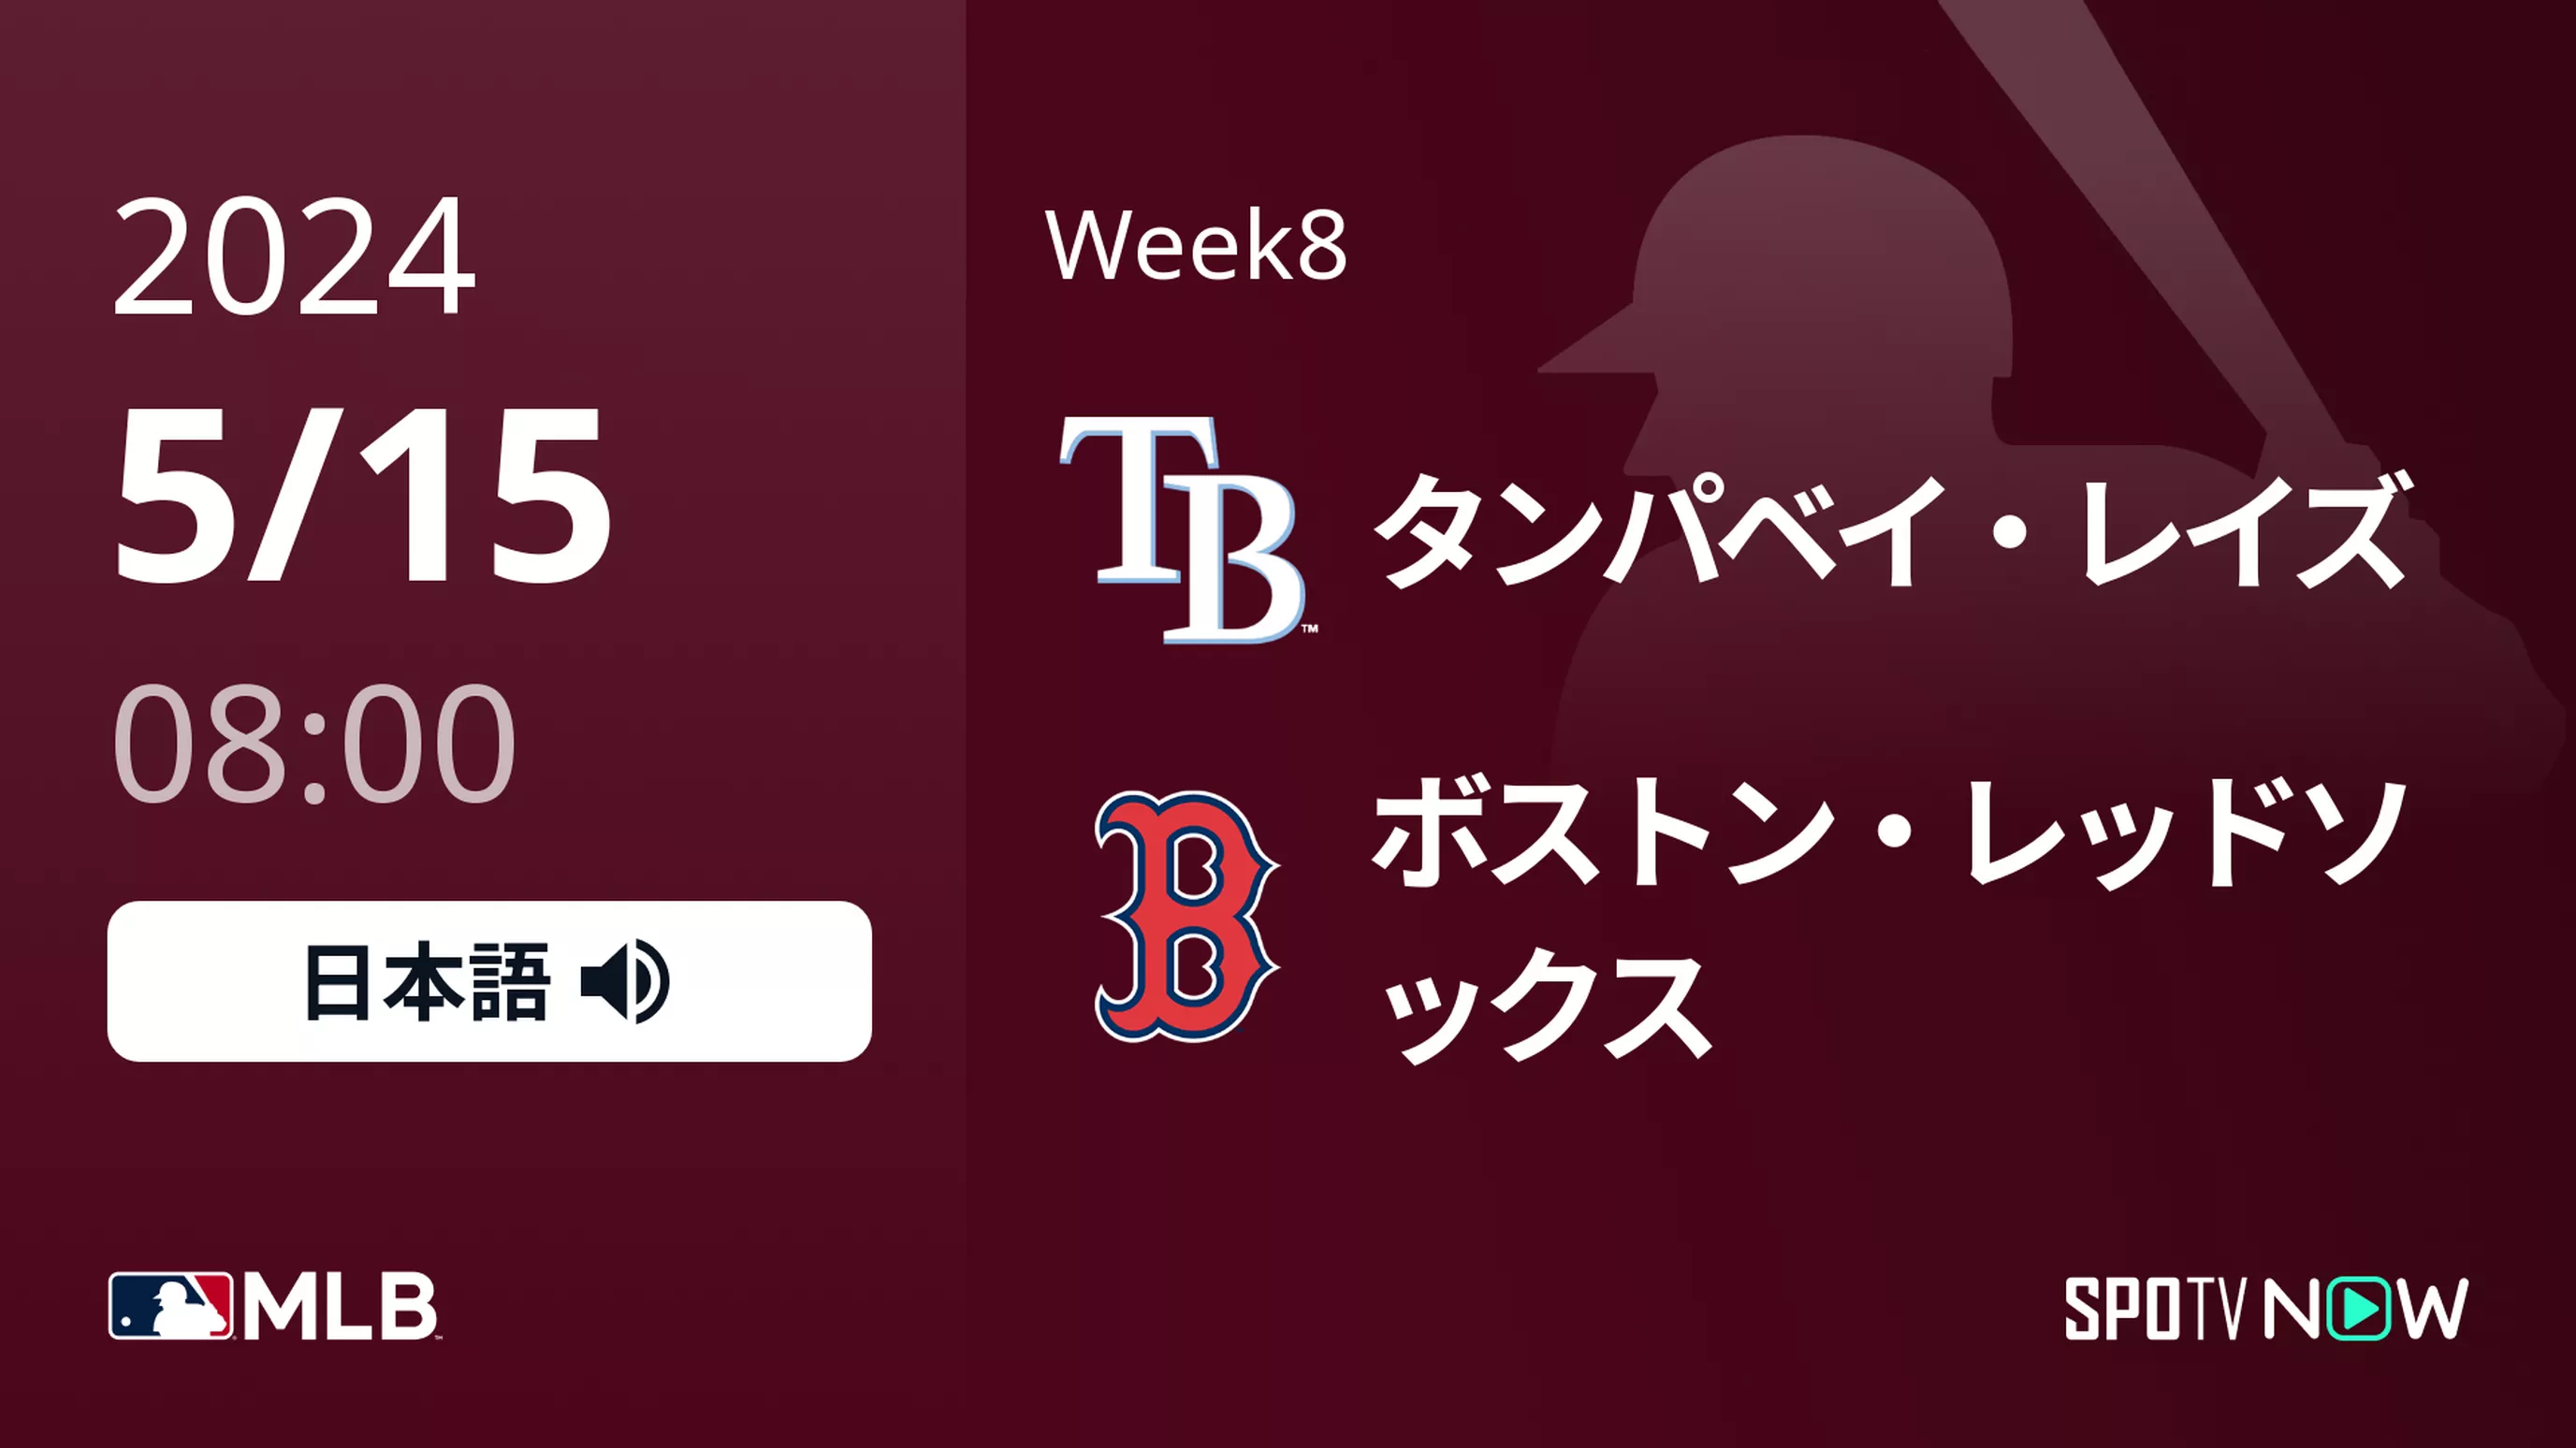 Week8 レイズ vs Rソックス 5/15[MLB]